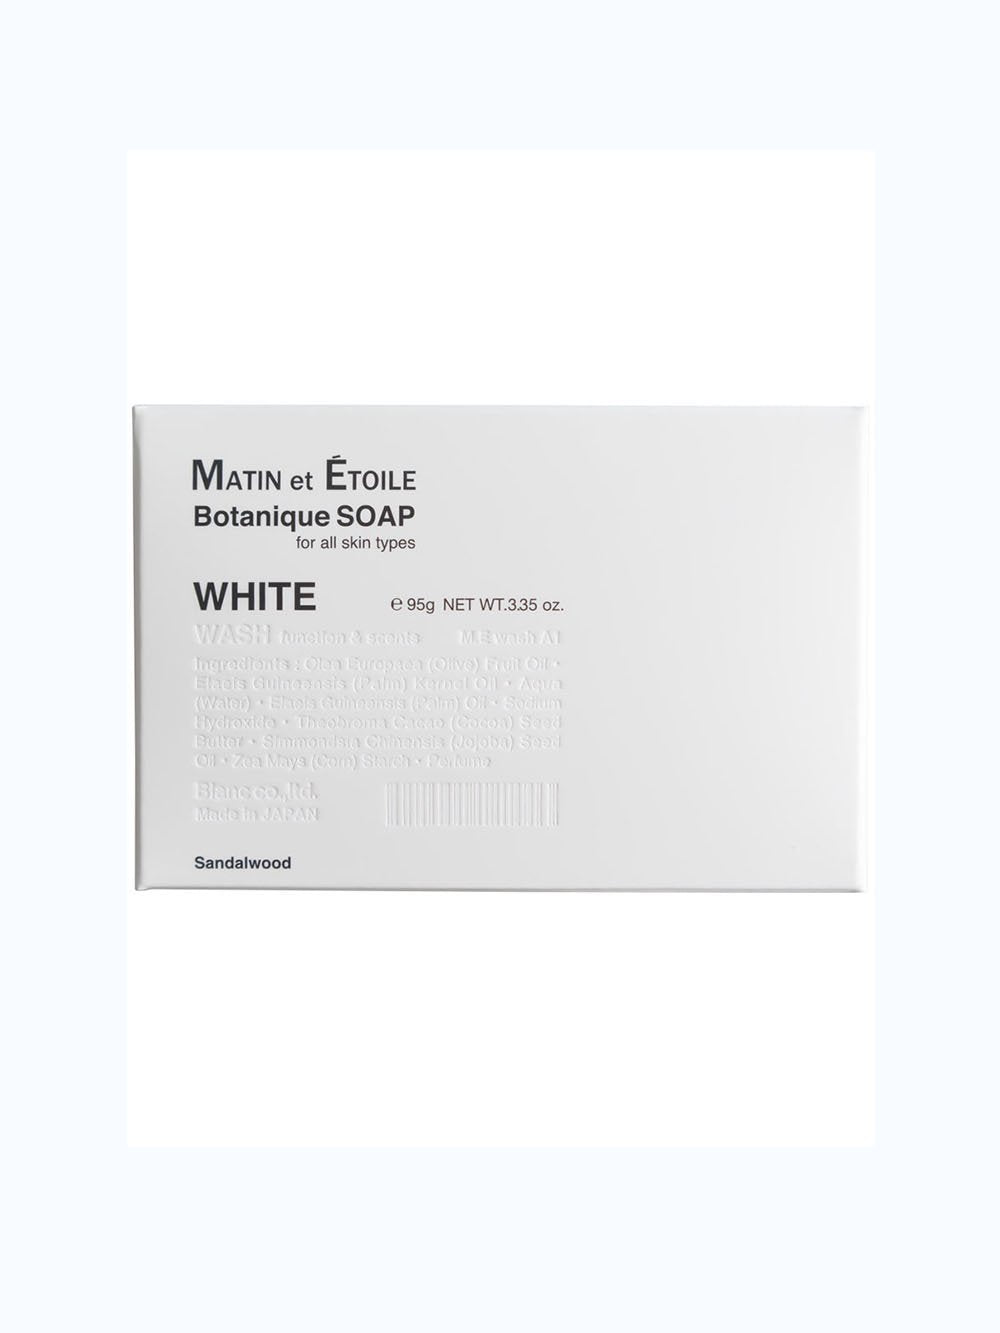 MATIN et ETOILE “ WHITE - Botanique Soap "